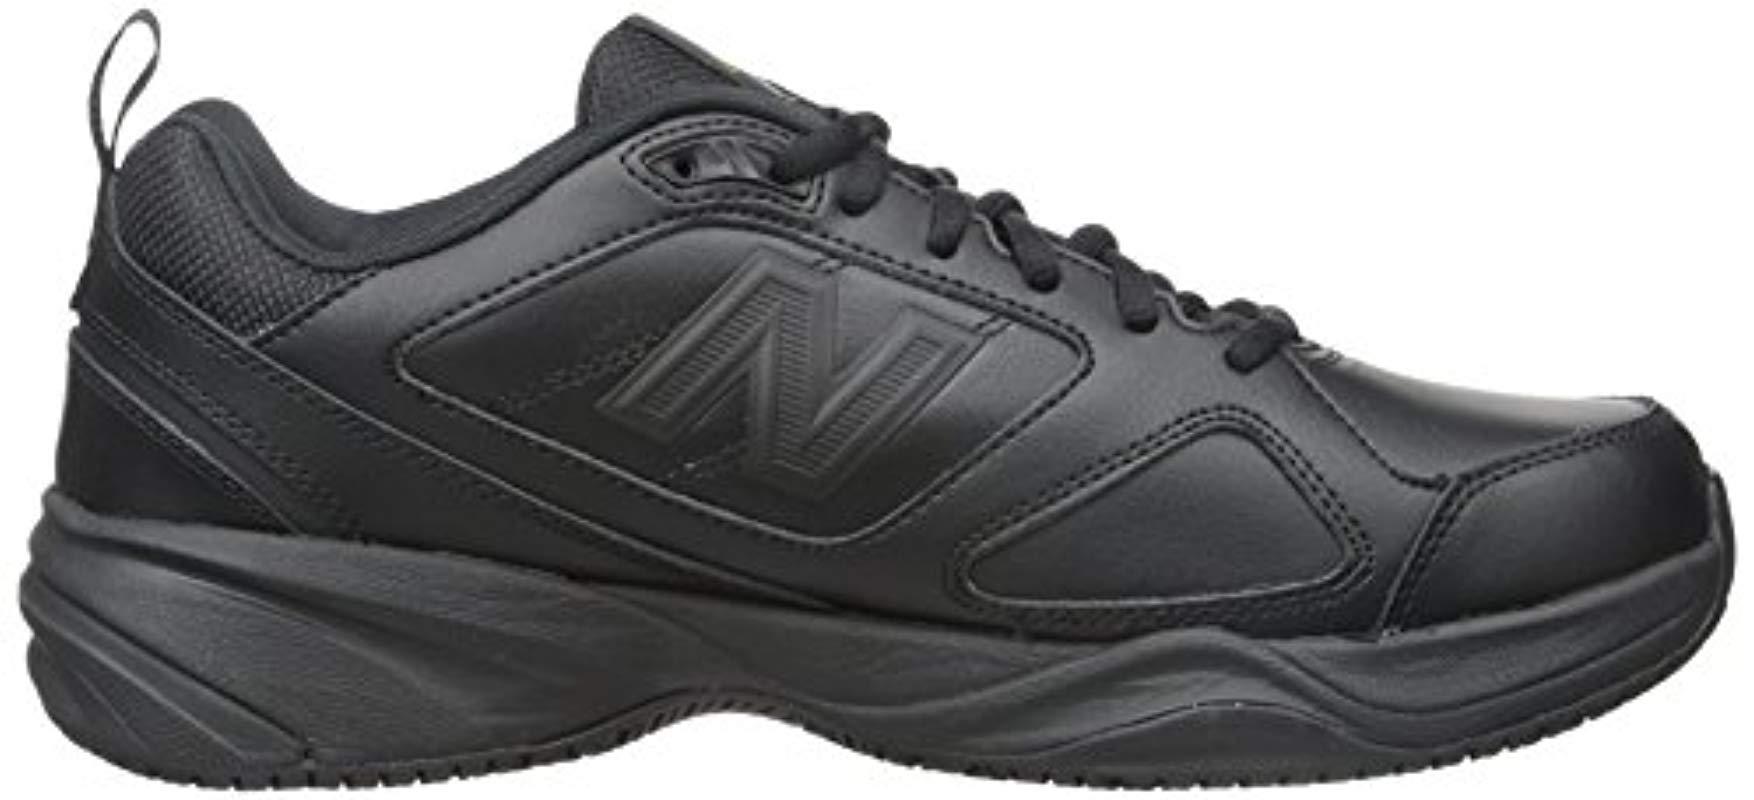 New Balance S 626v2 Shoes, Uk: 7 Uk Width D, Black for Men - Lyst